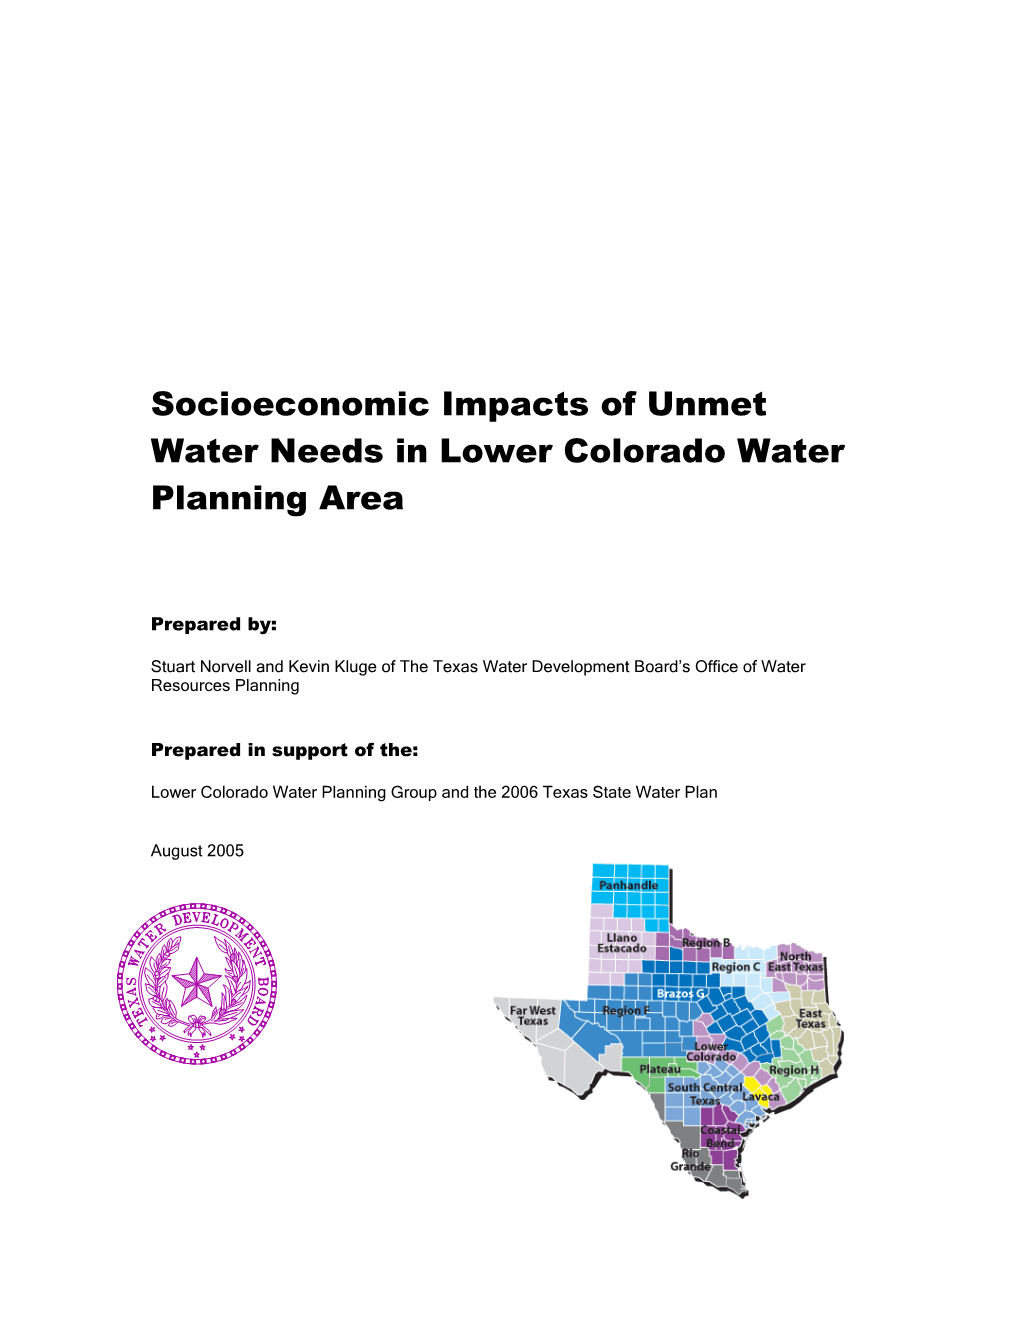 Socioeconomic Impacts of Unmet Water Needs in Lower Coloradowater Planning Area